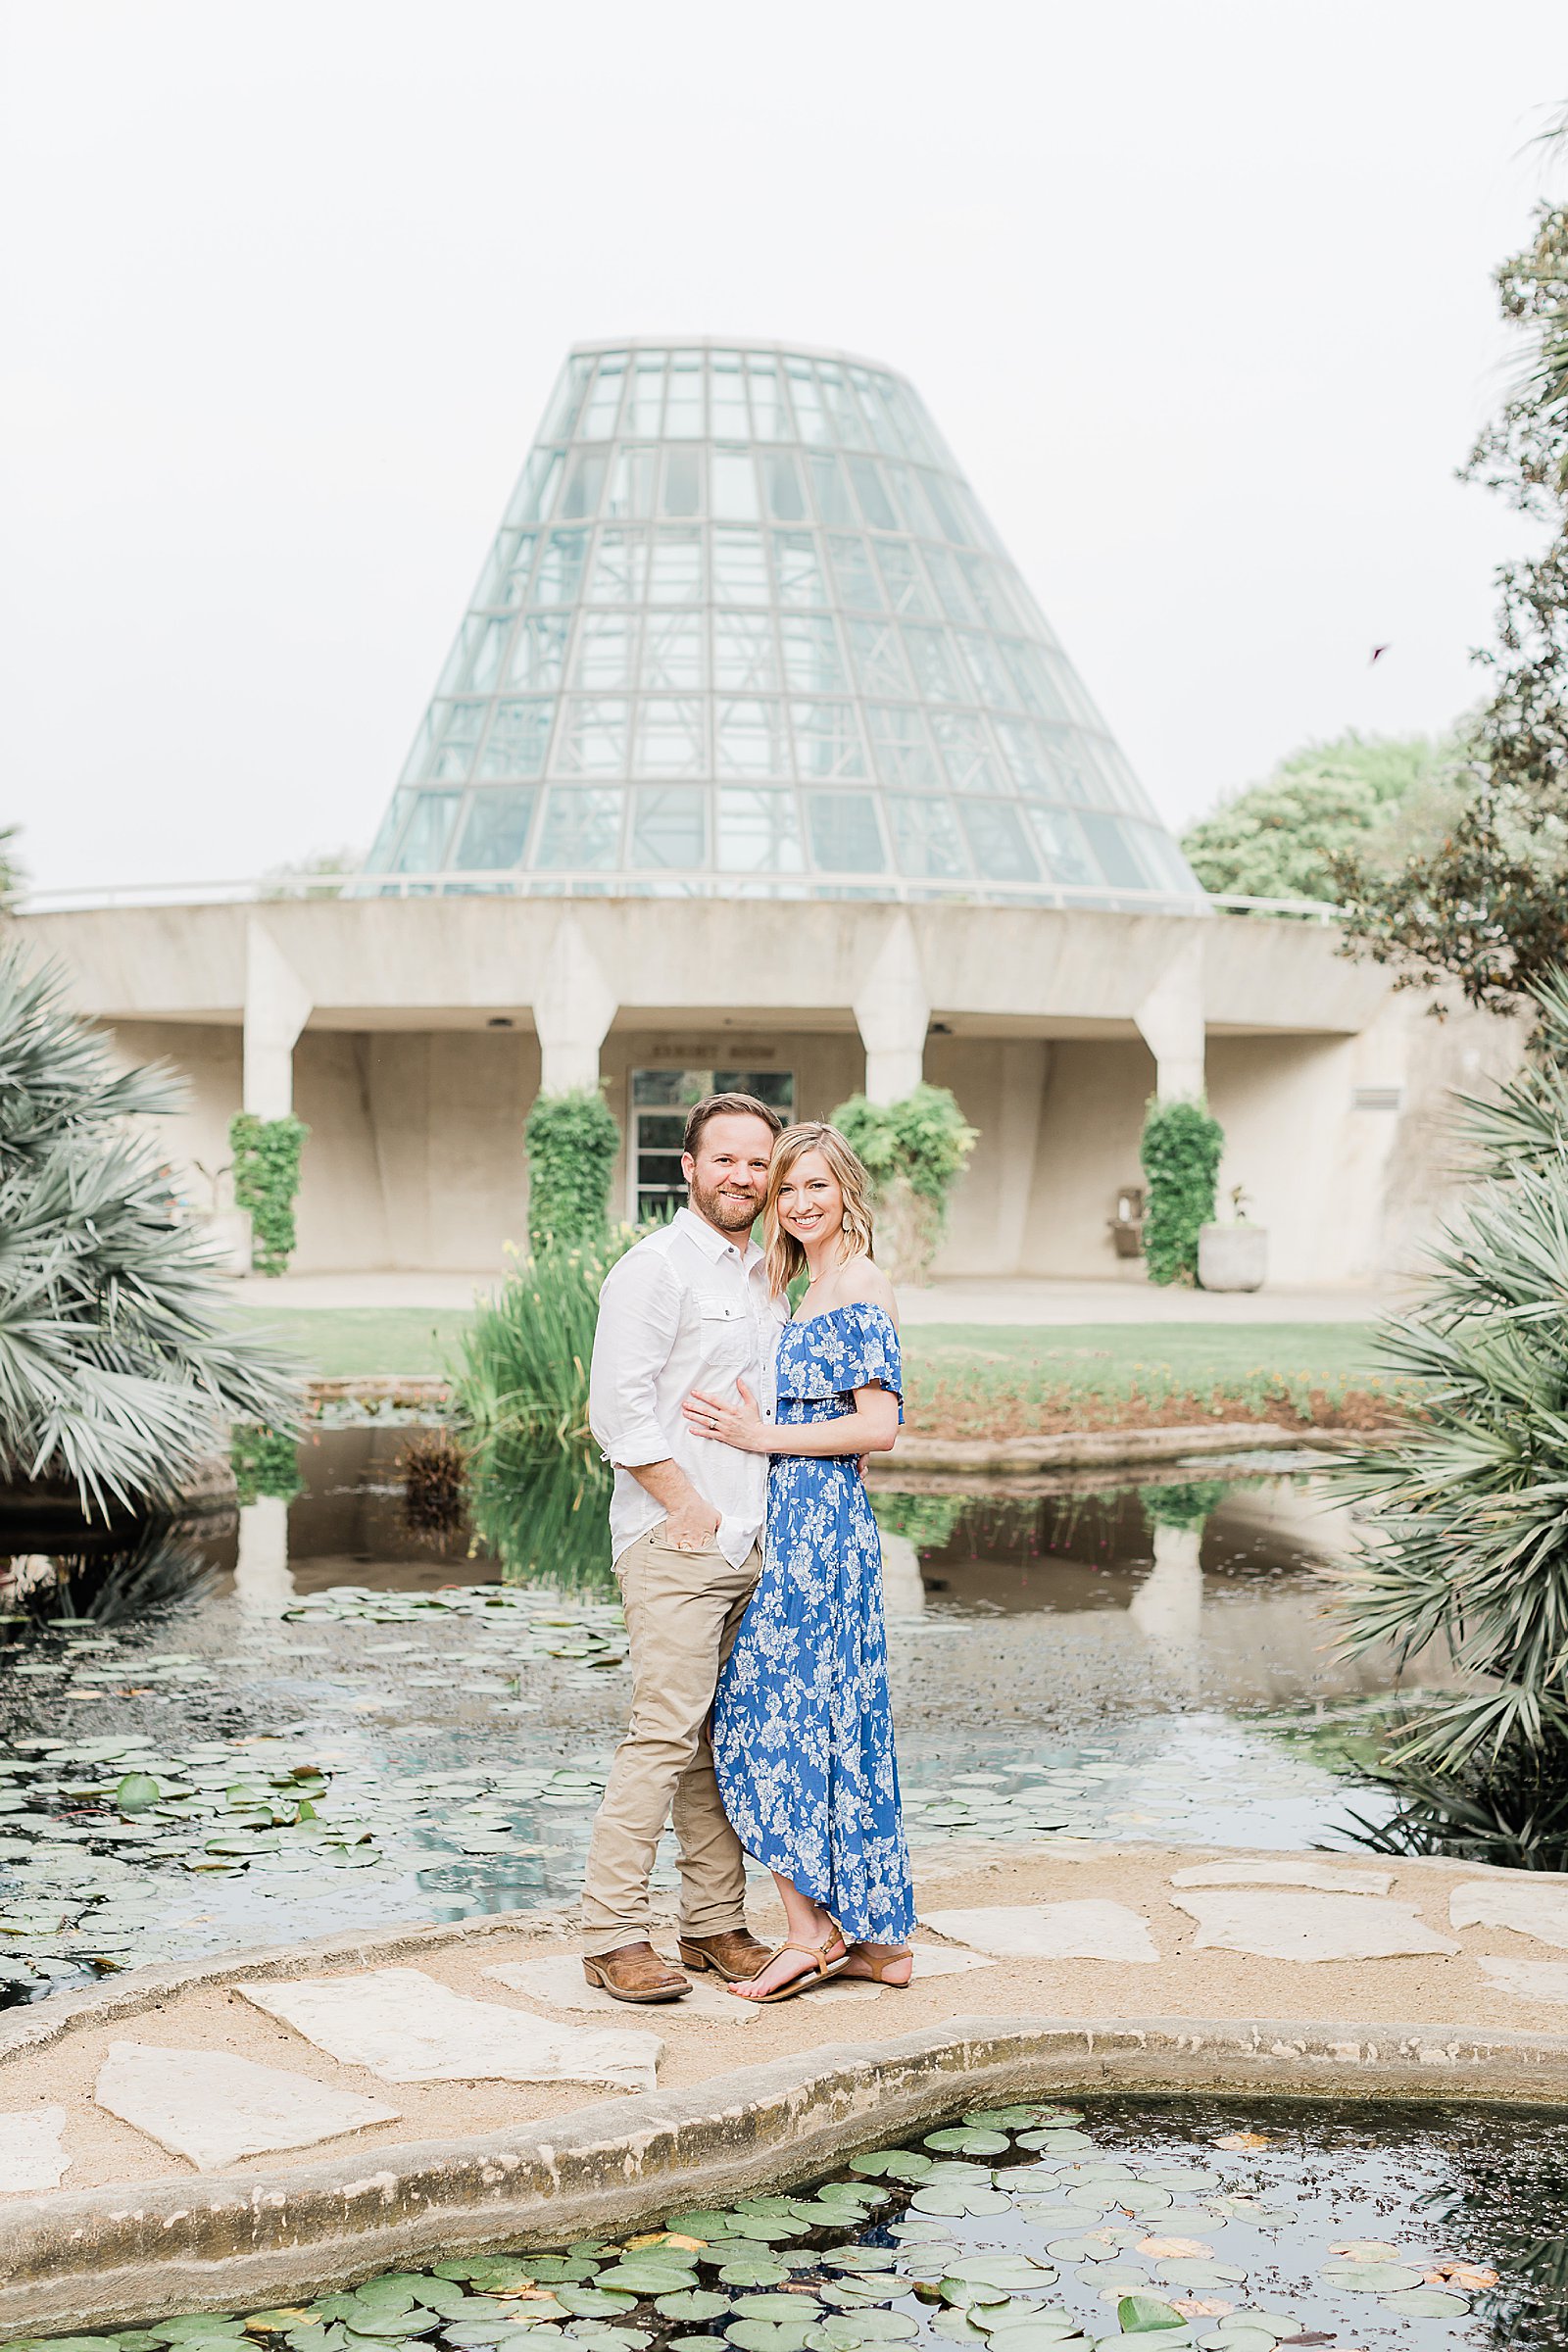 Engagement Session at Botanical Gardens, Anna Kay Photography, Wedding Photographer